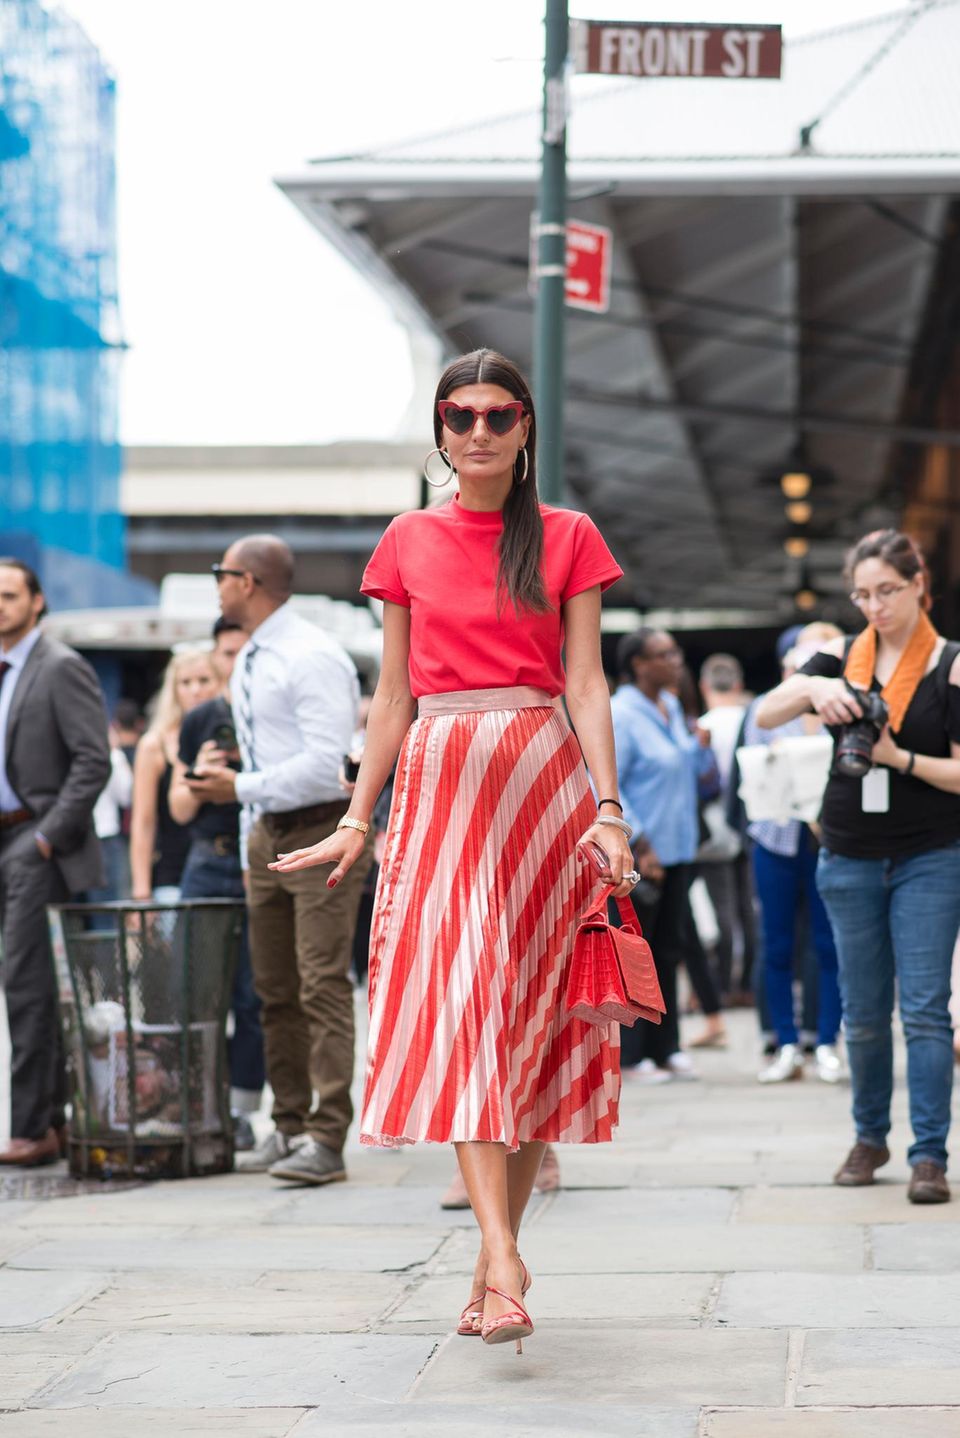 Bloggerin trägt ein Outfit komplett in Rot